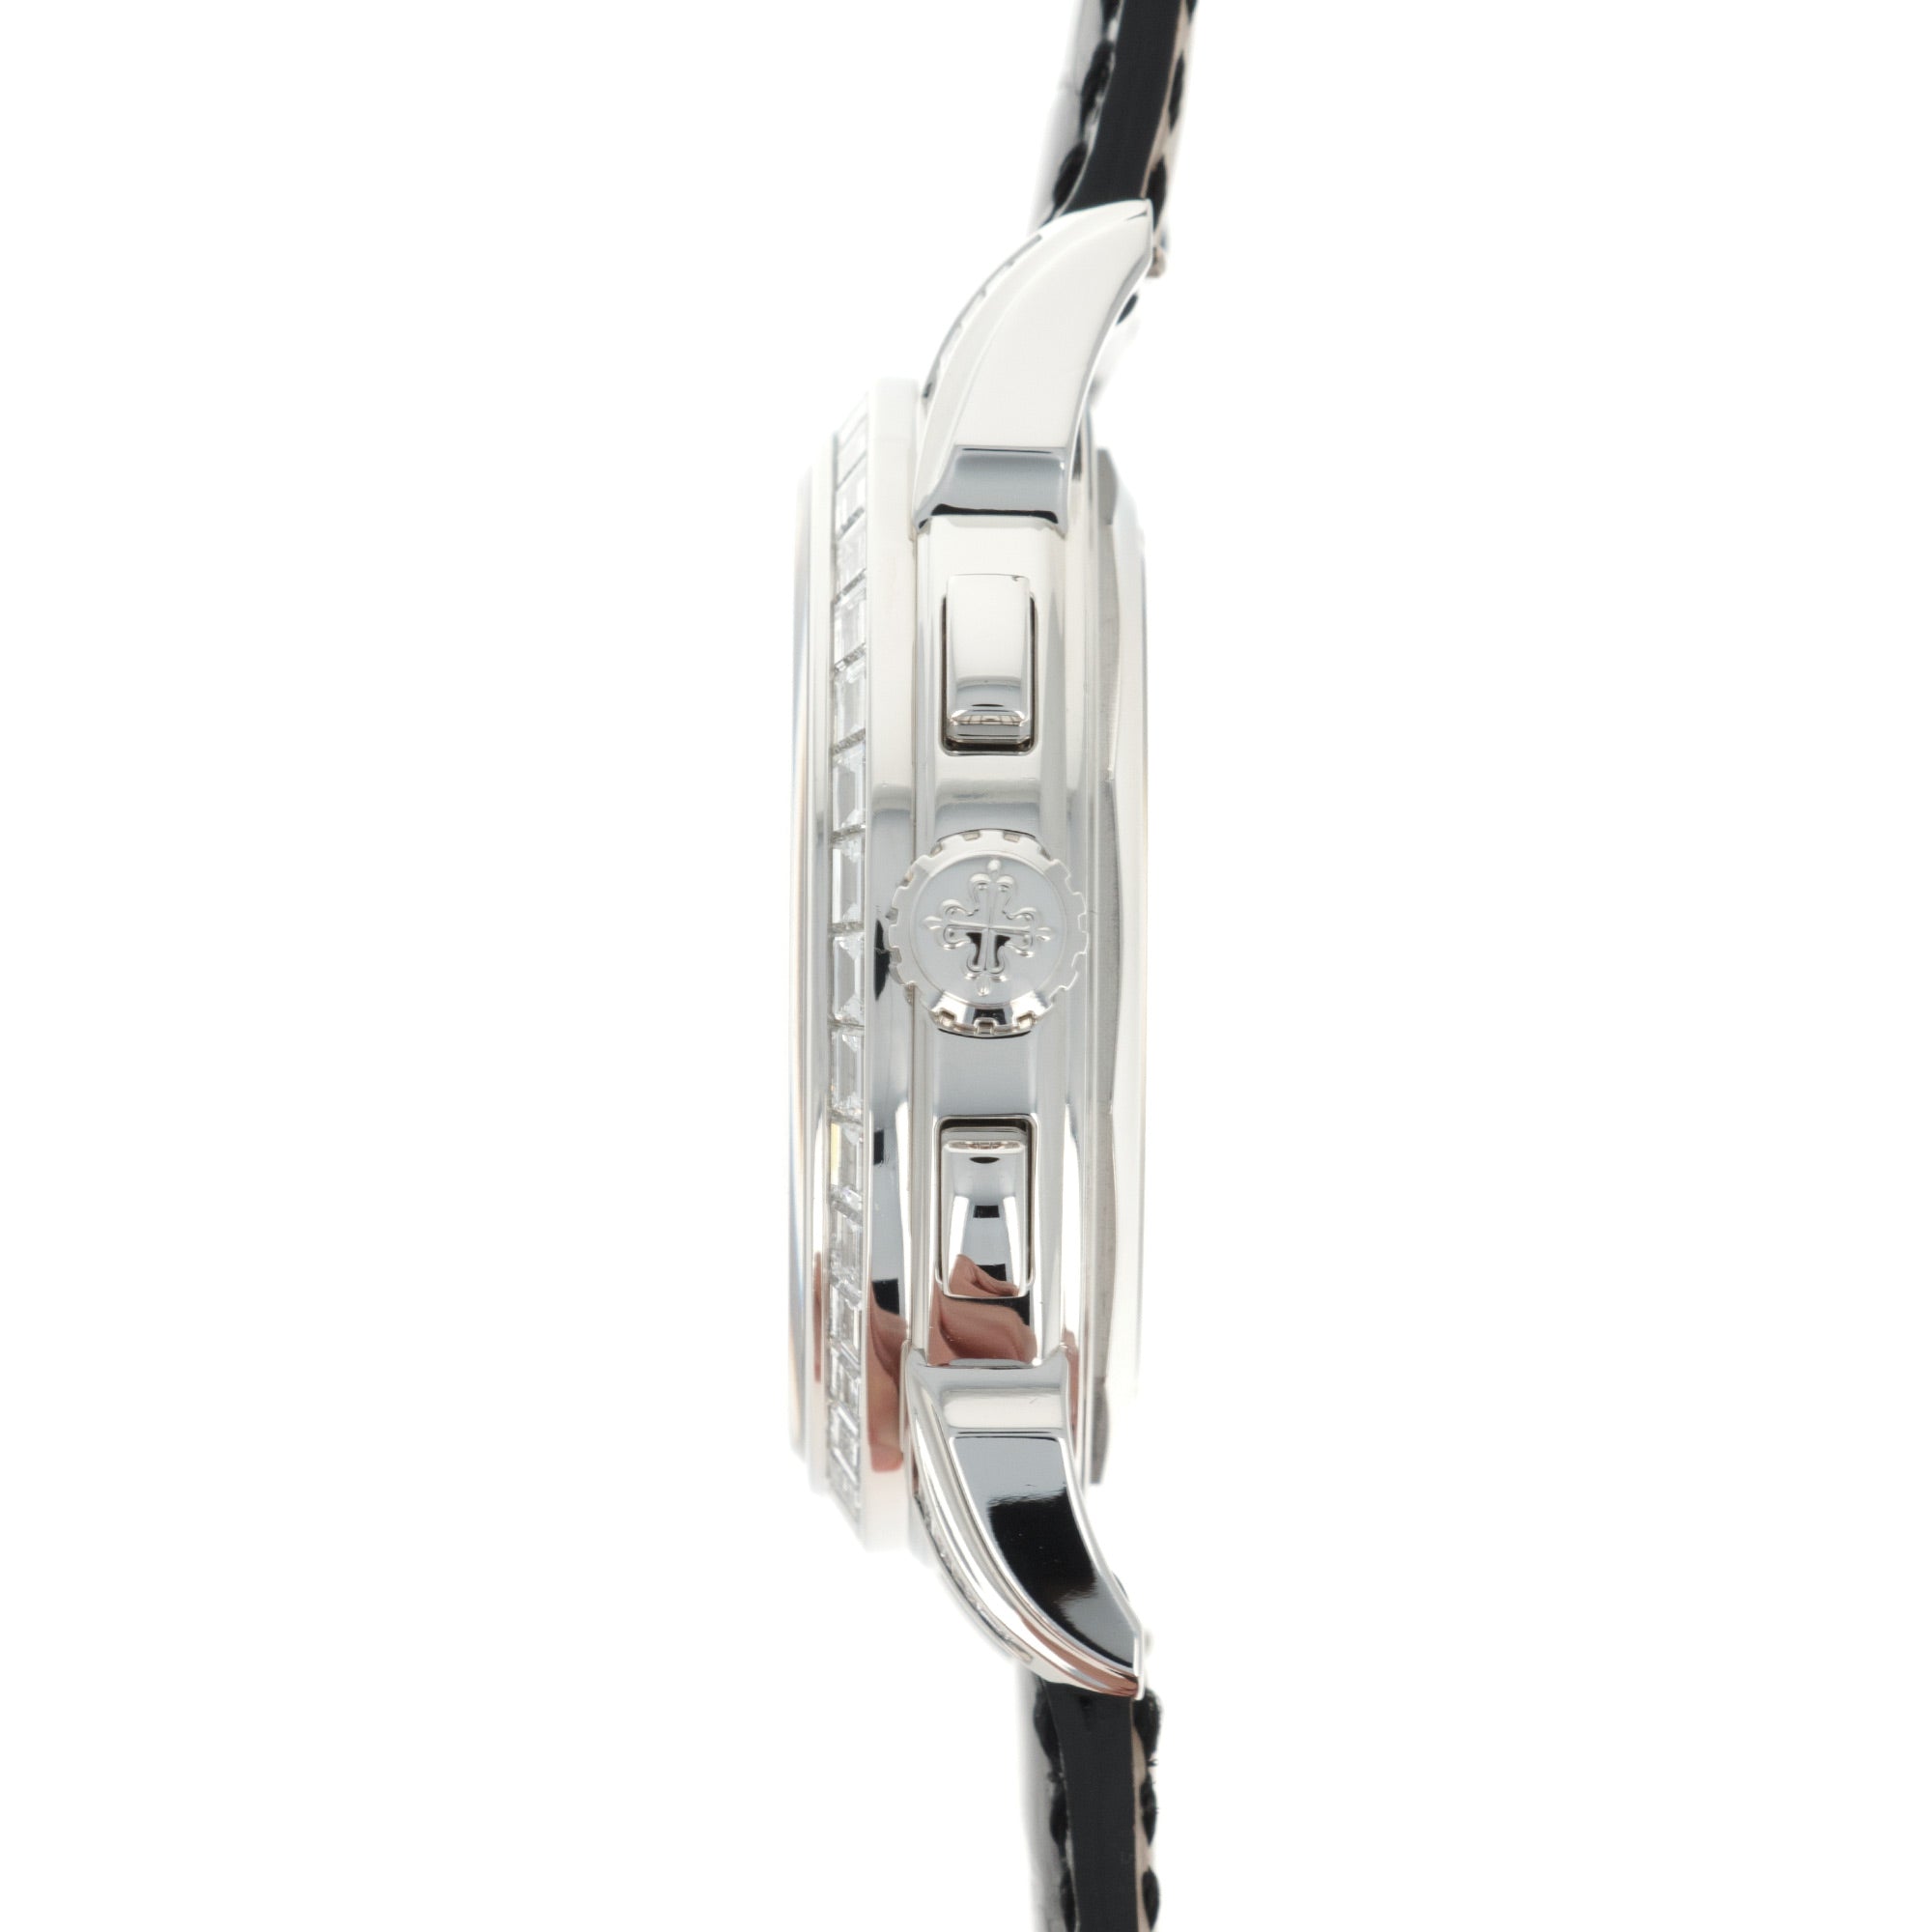 Patek Philippe - Patek Philippe Platinum Perpetual Calendar Chrono Baguette Diamond Watch Ref. 5271 - The Keystone Watches